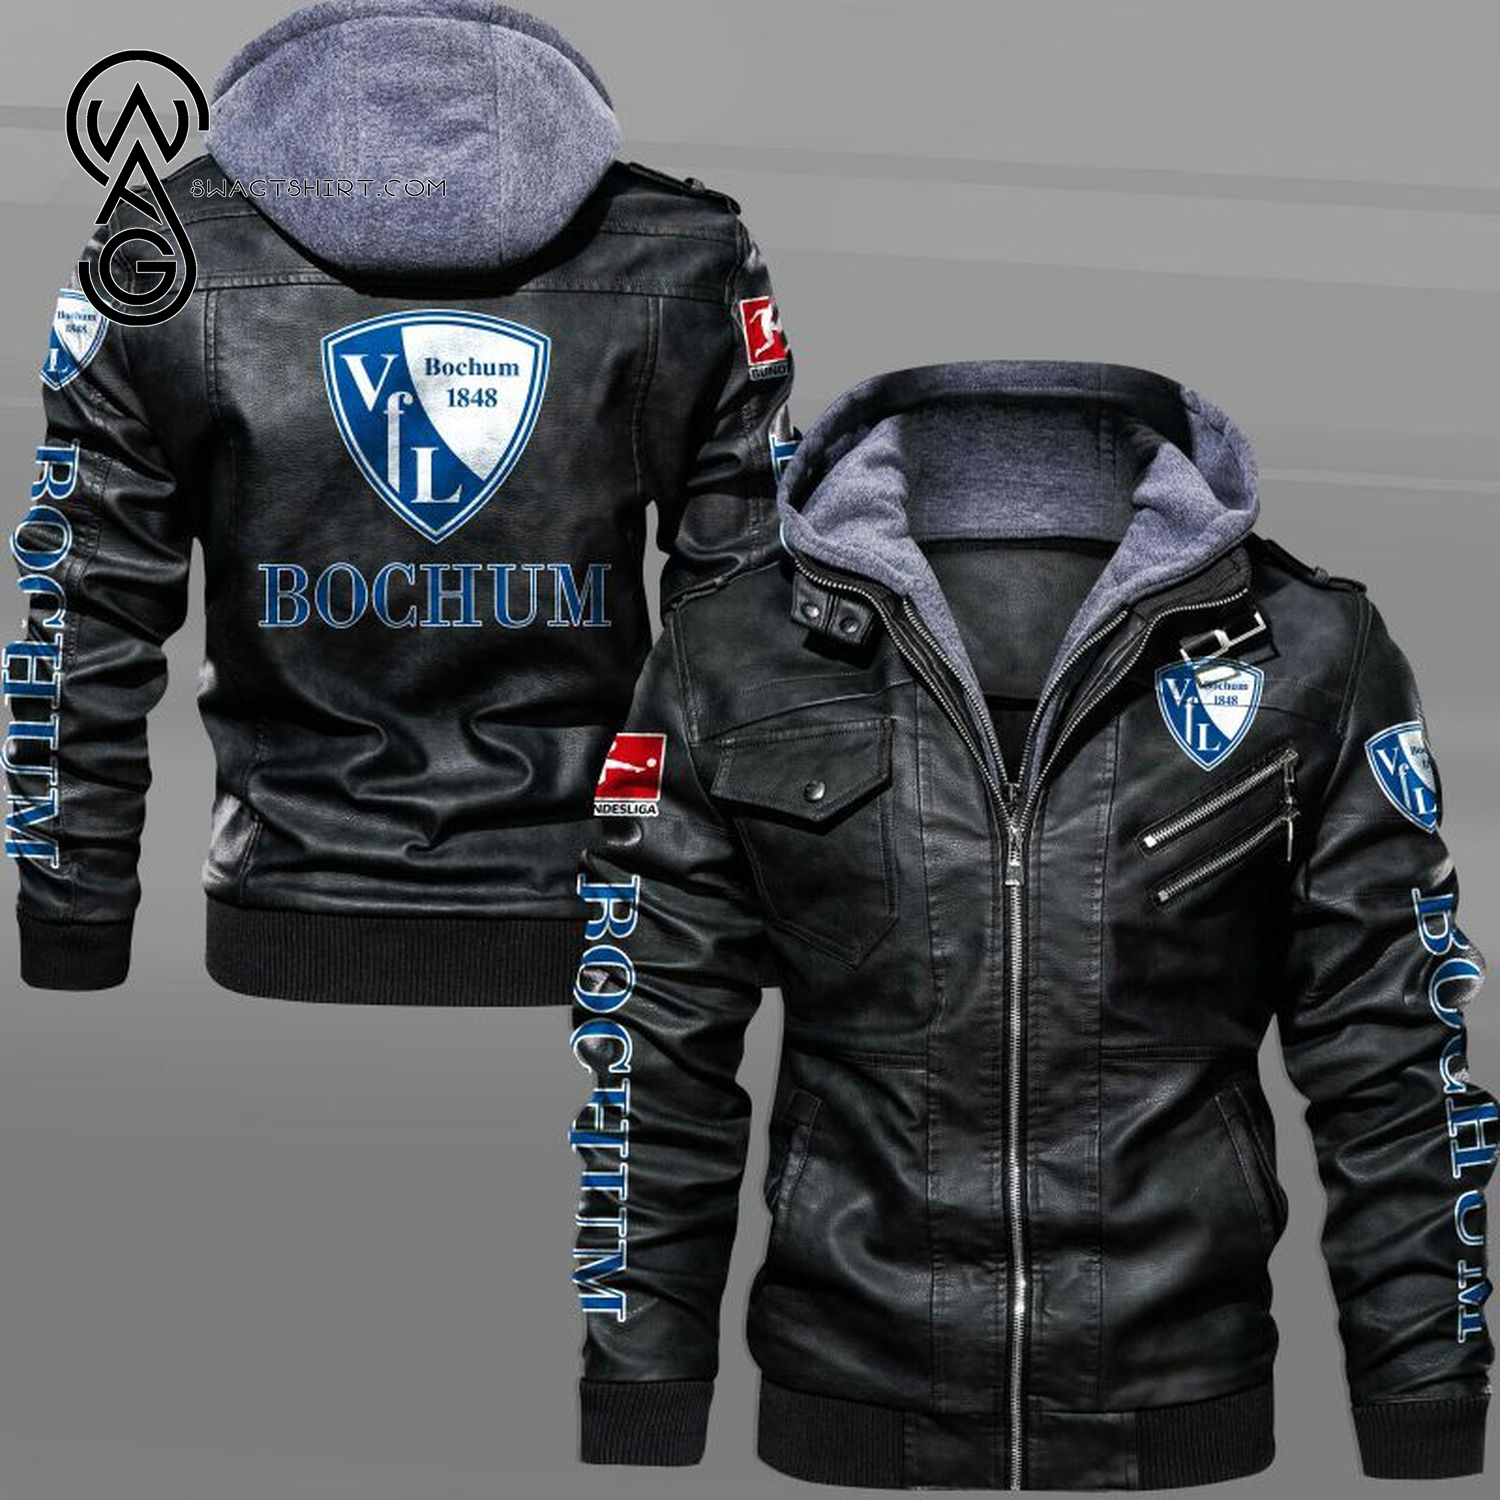 VfL Bochum Football Club Leather Jacket